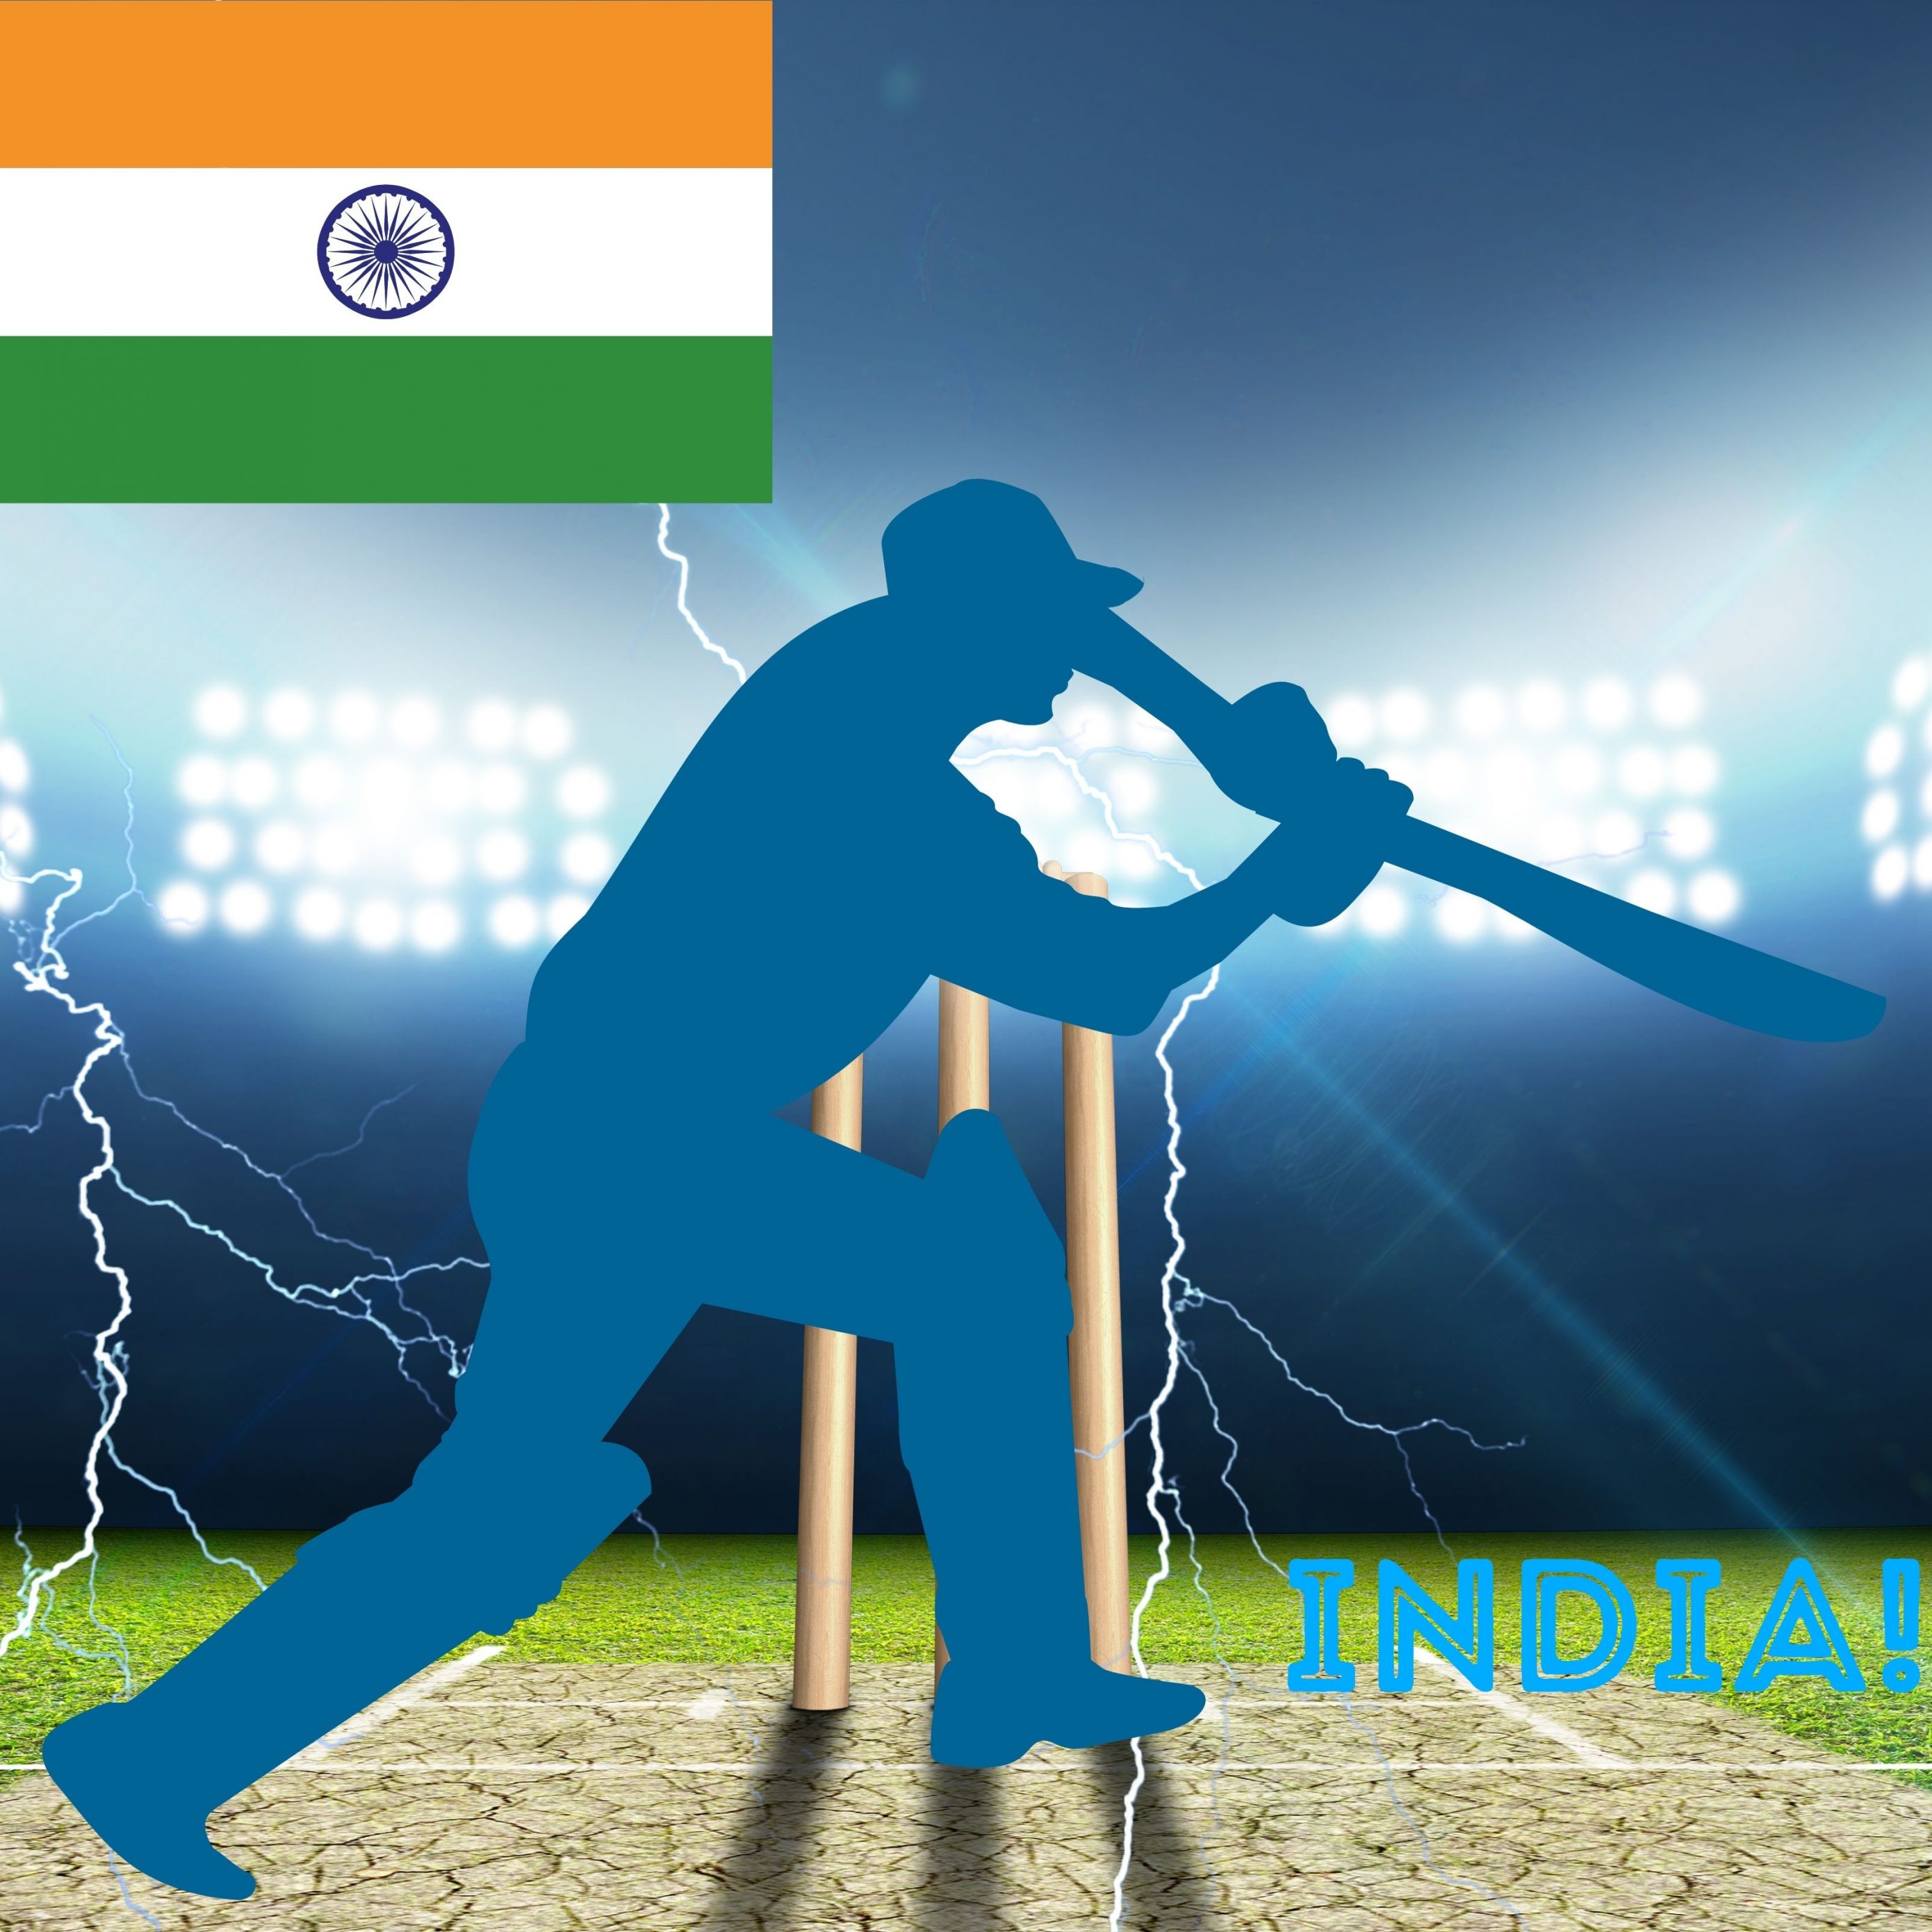 2780x2780 Parallax wallpaper 4k India Cricket Stadium iPad Wallpaper 2780x2780 pixels resolution